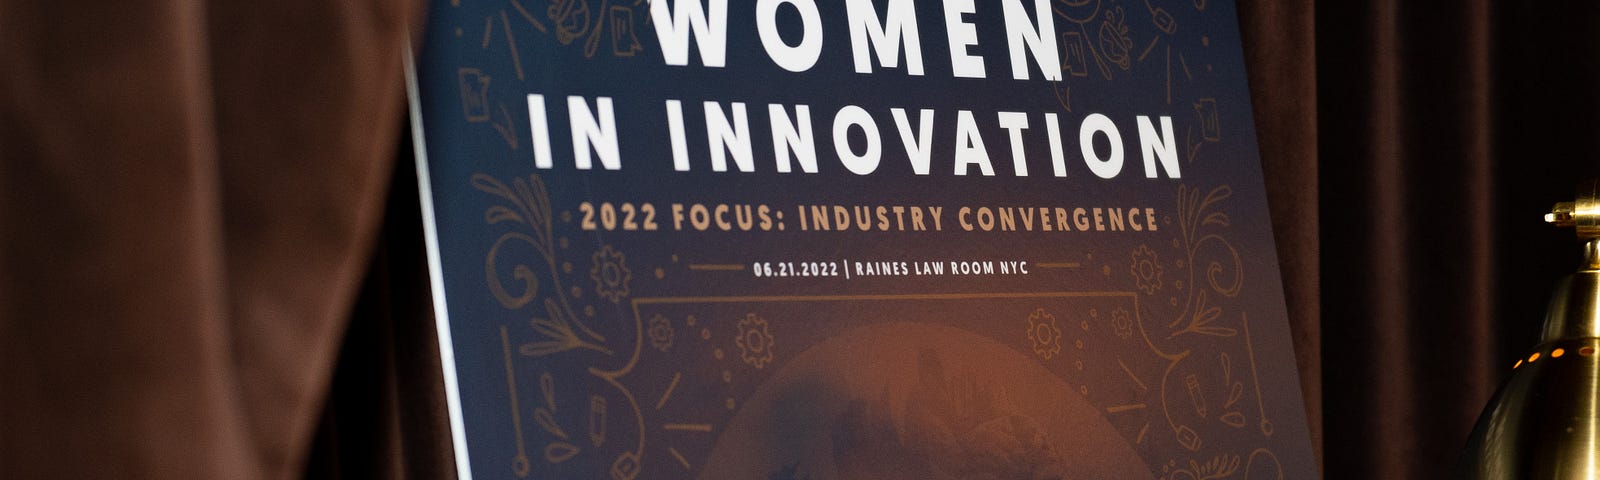 Celebrating Women in Innovation NYC 2022 Event Recap